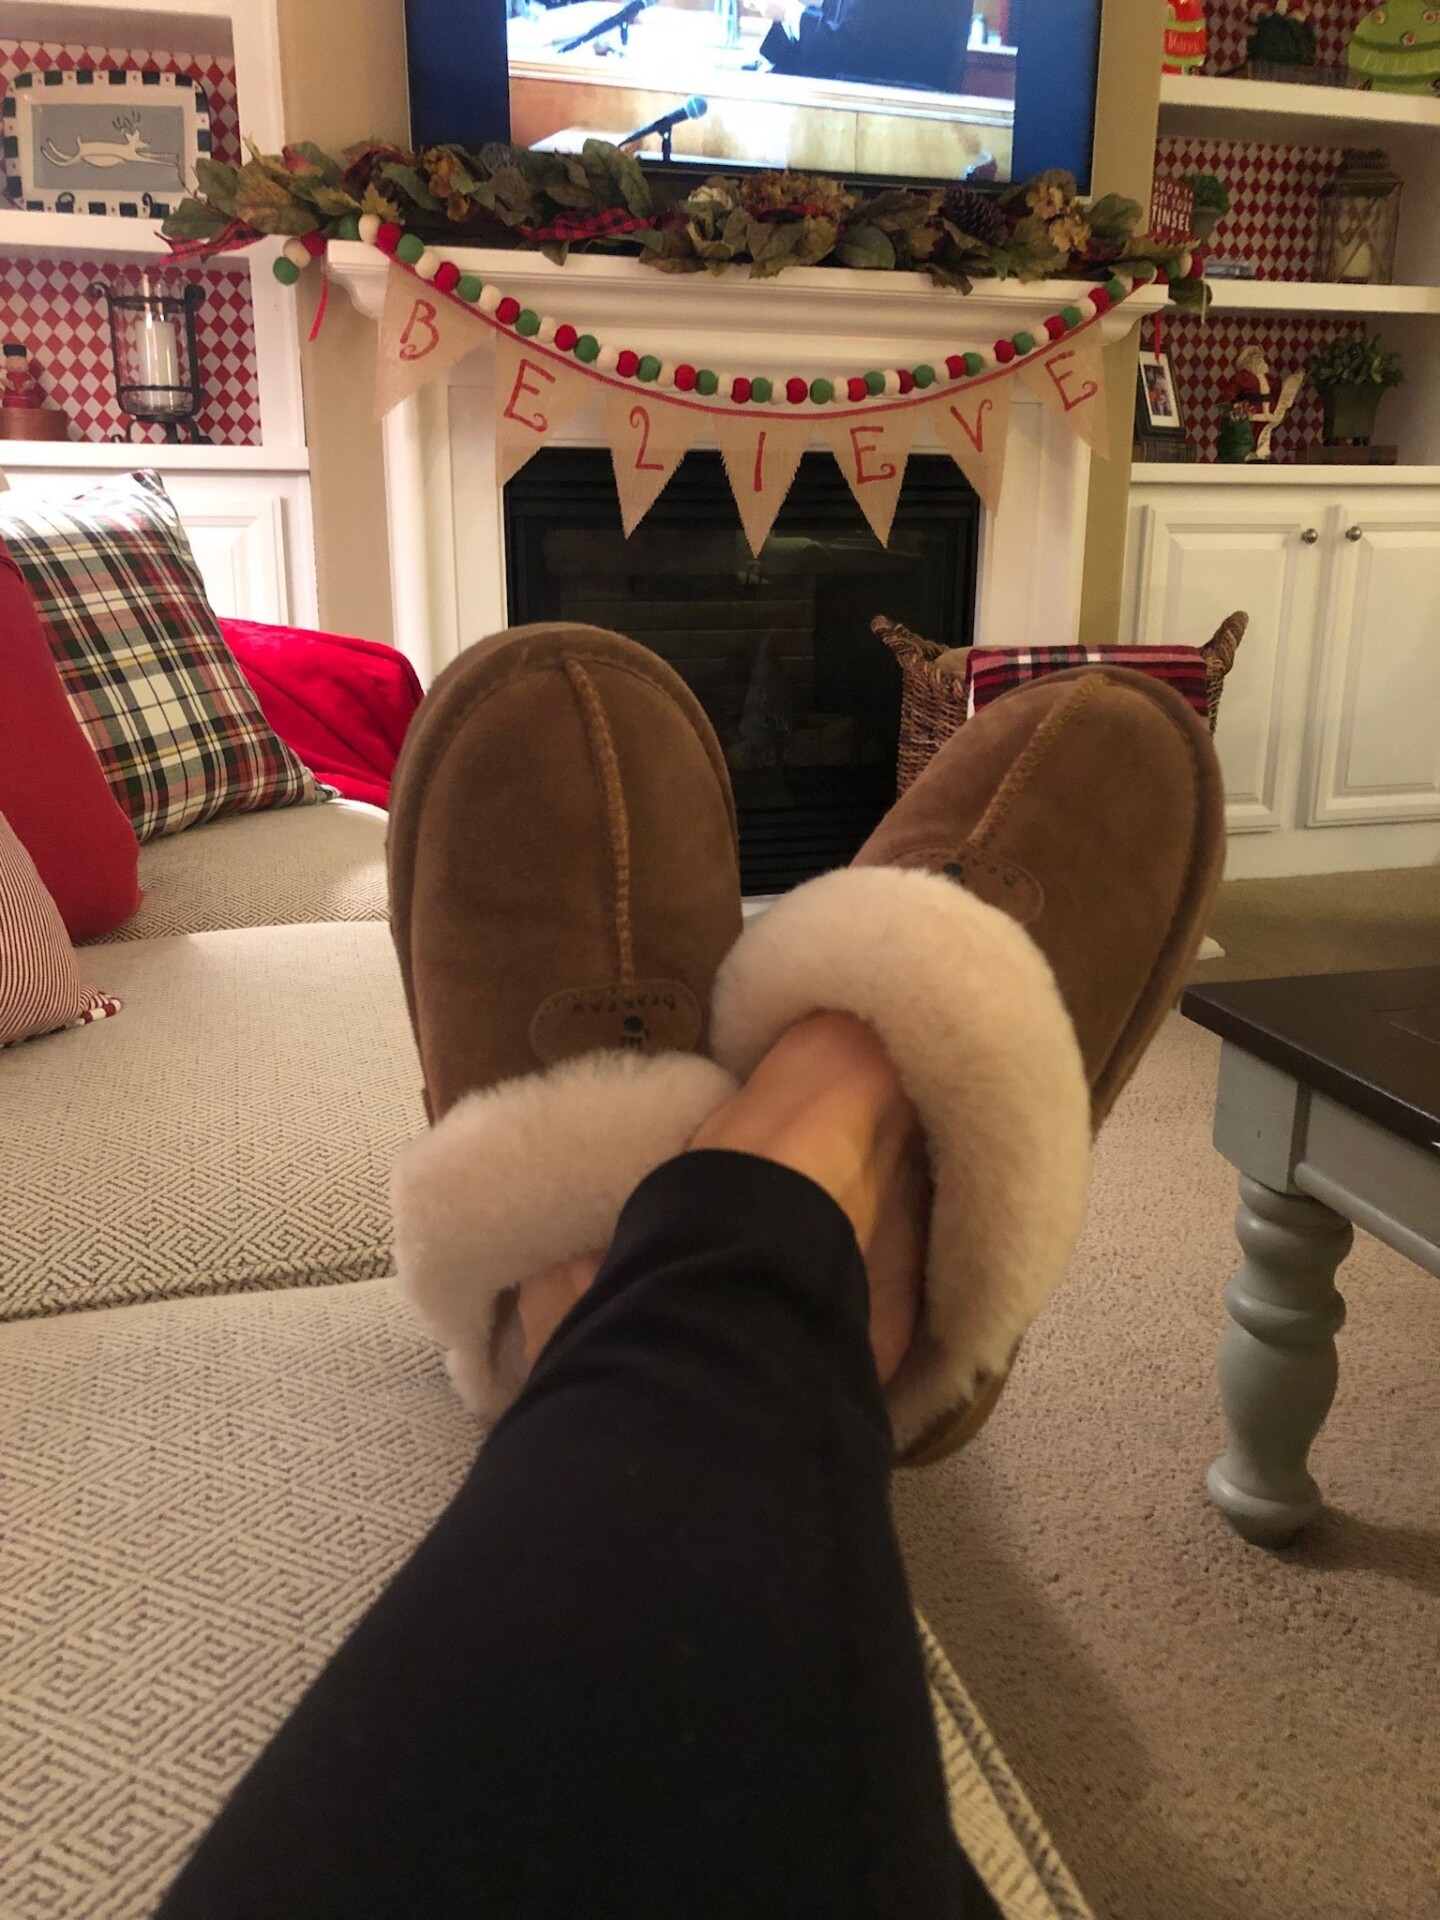 Bearpaw slippers, What I'm living lately